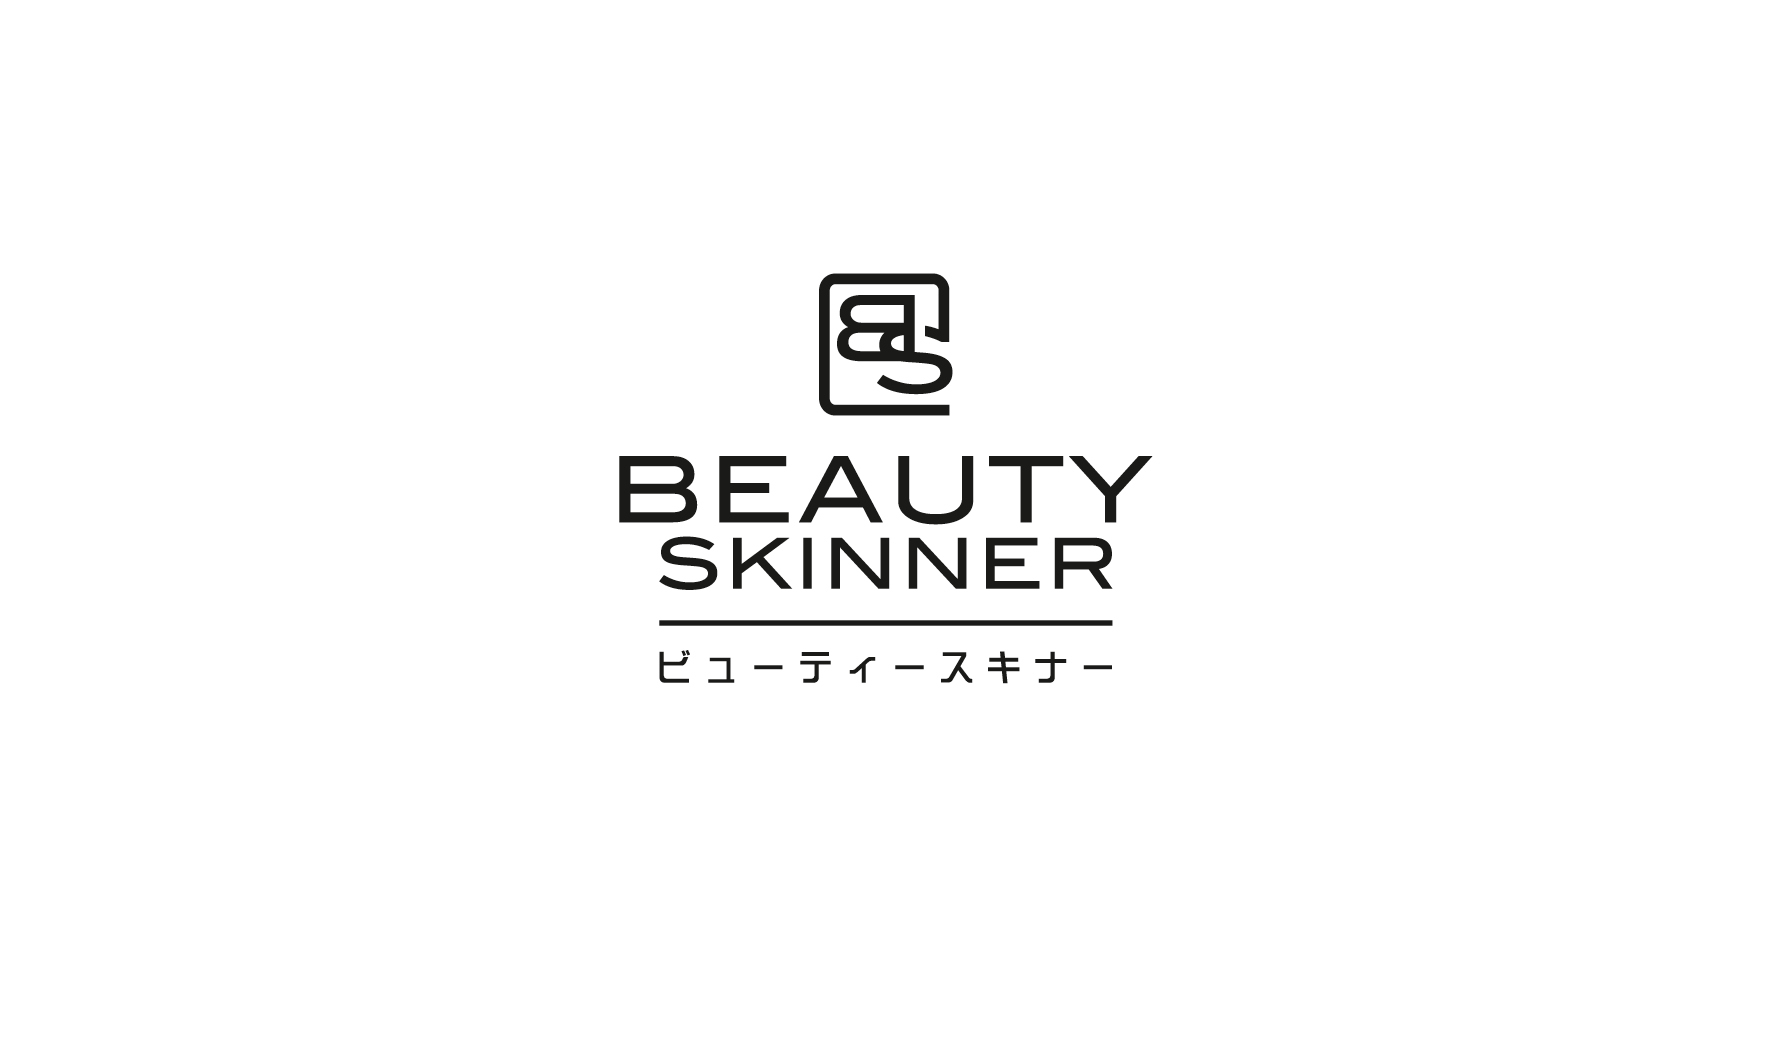 logo, Beauty skinner, packaging cosmetique